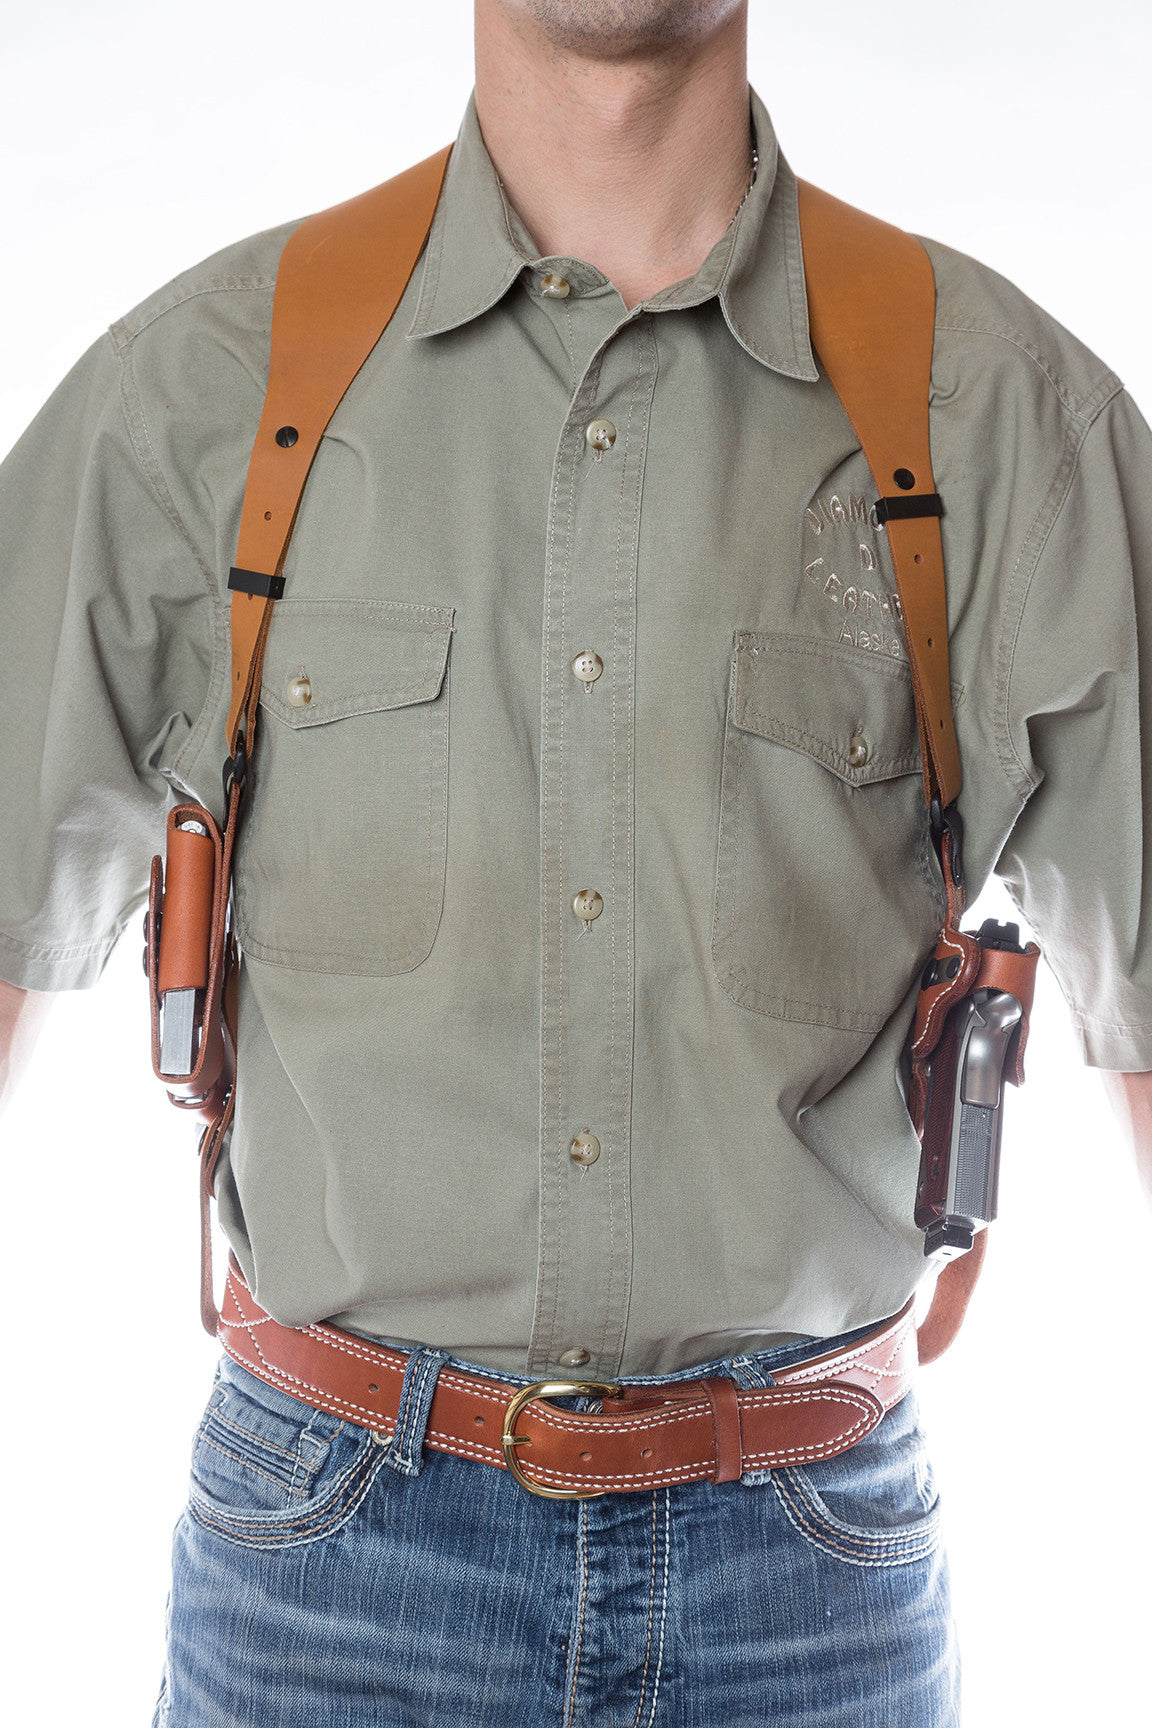  TEMS Active Shoulder Holster for Concealed Carry